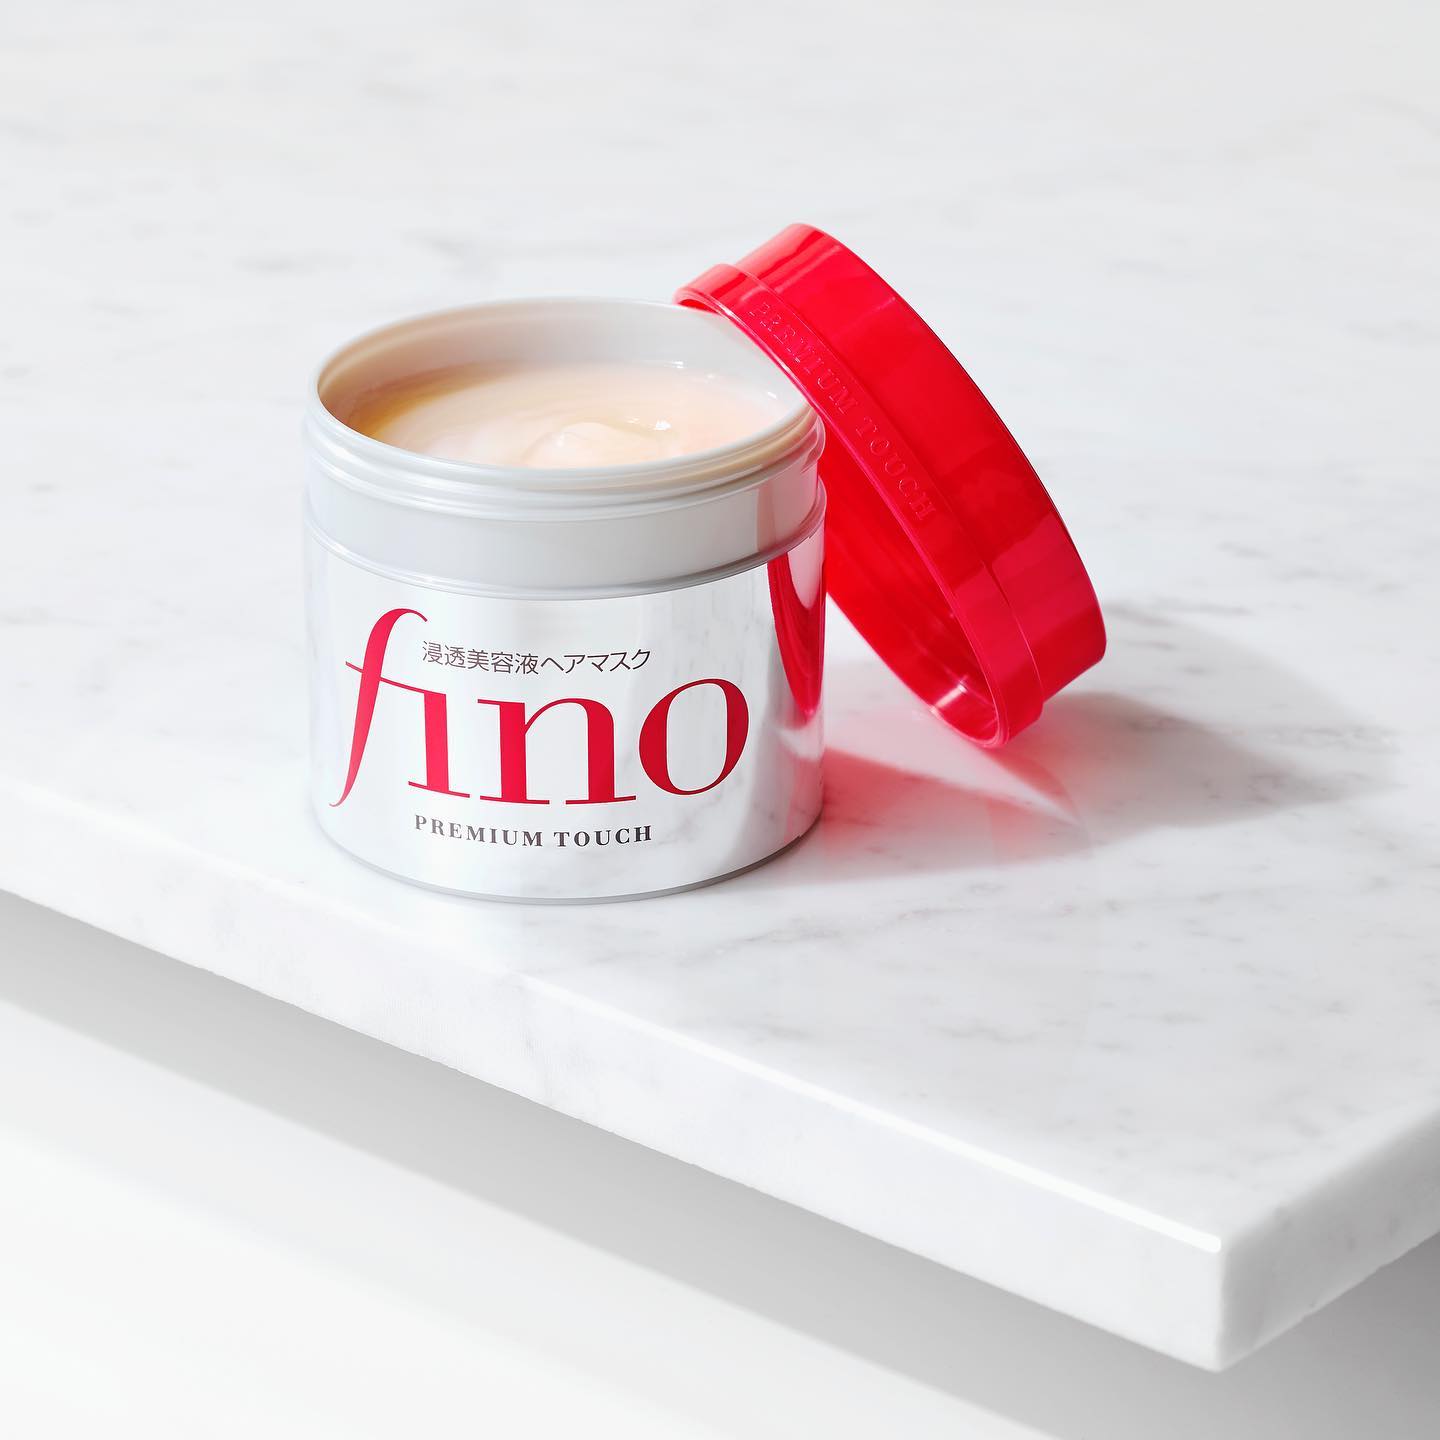 Fino Premium Touch Essence Hair Mask